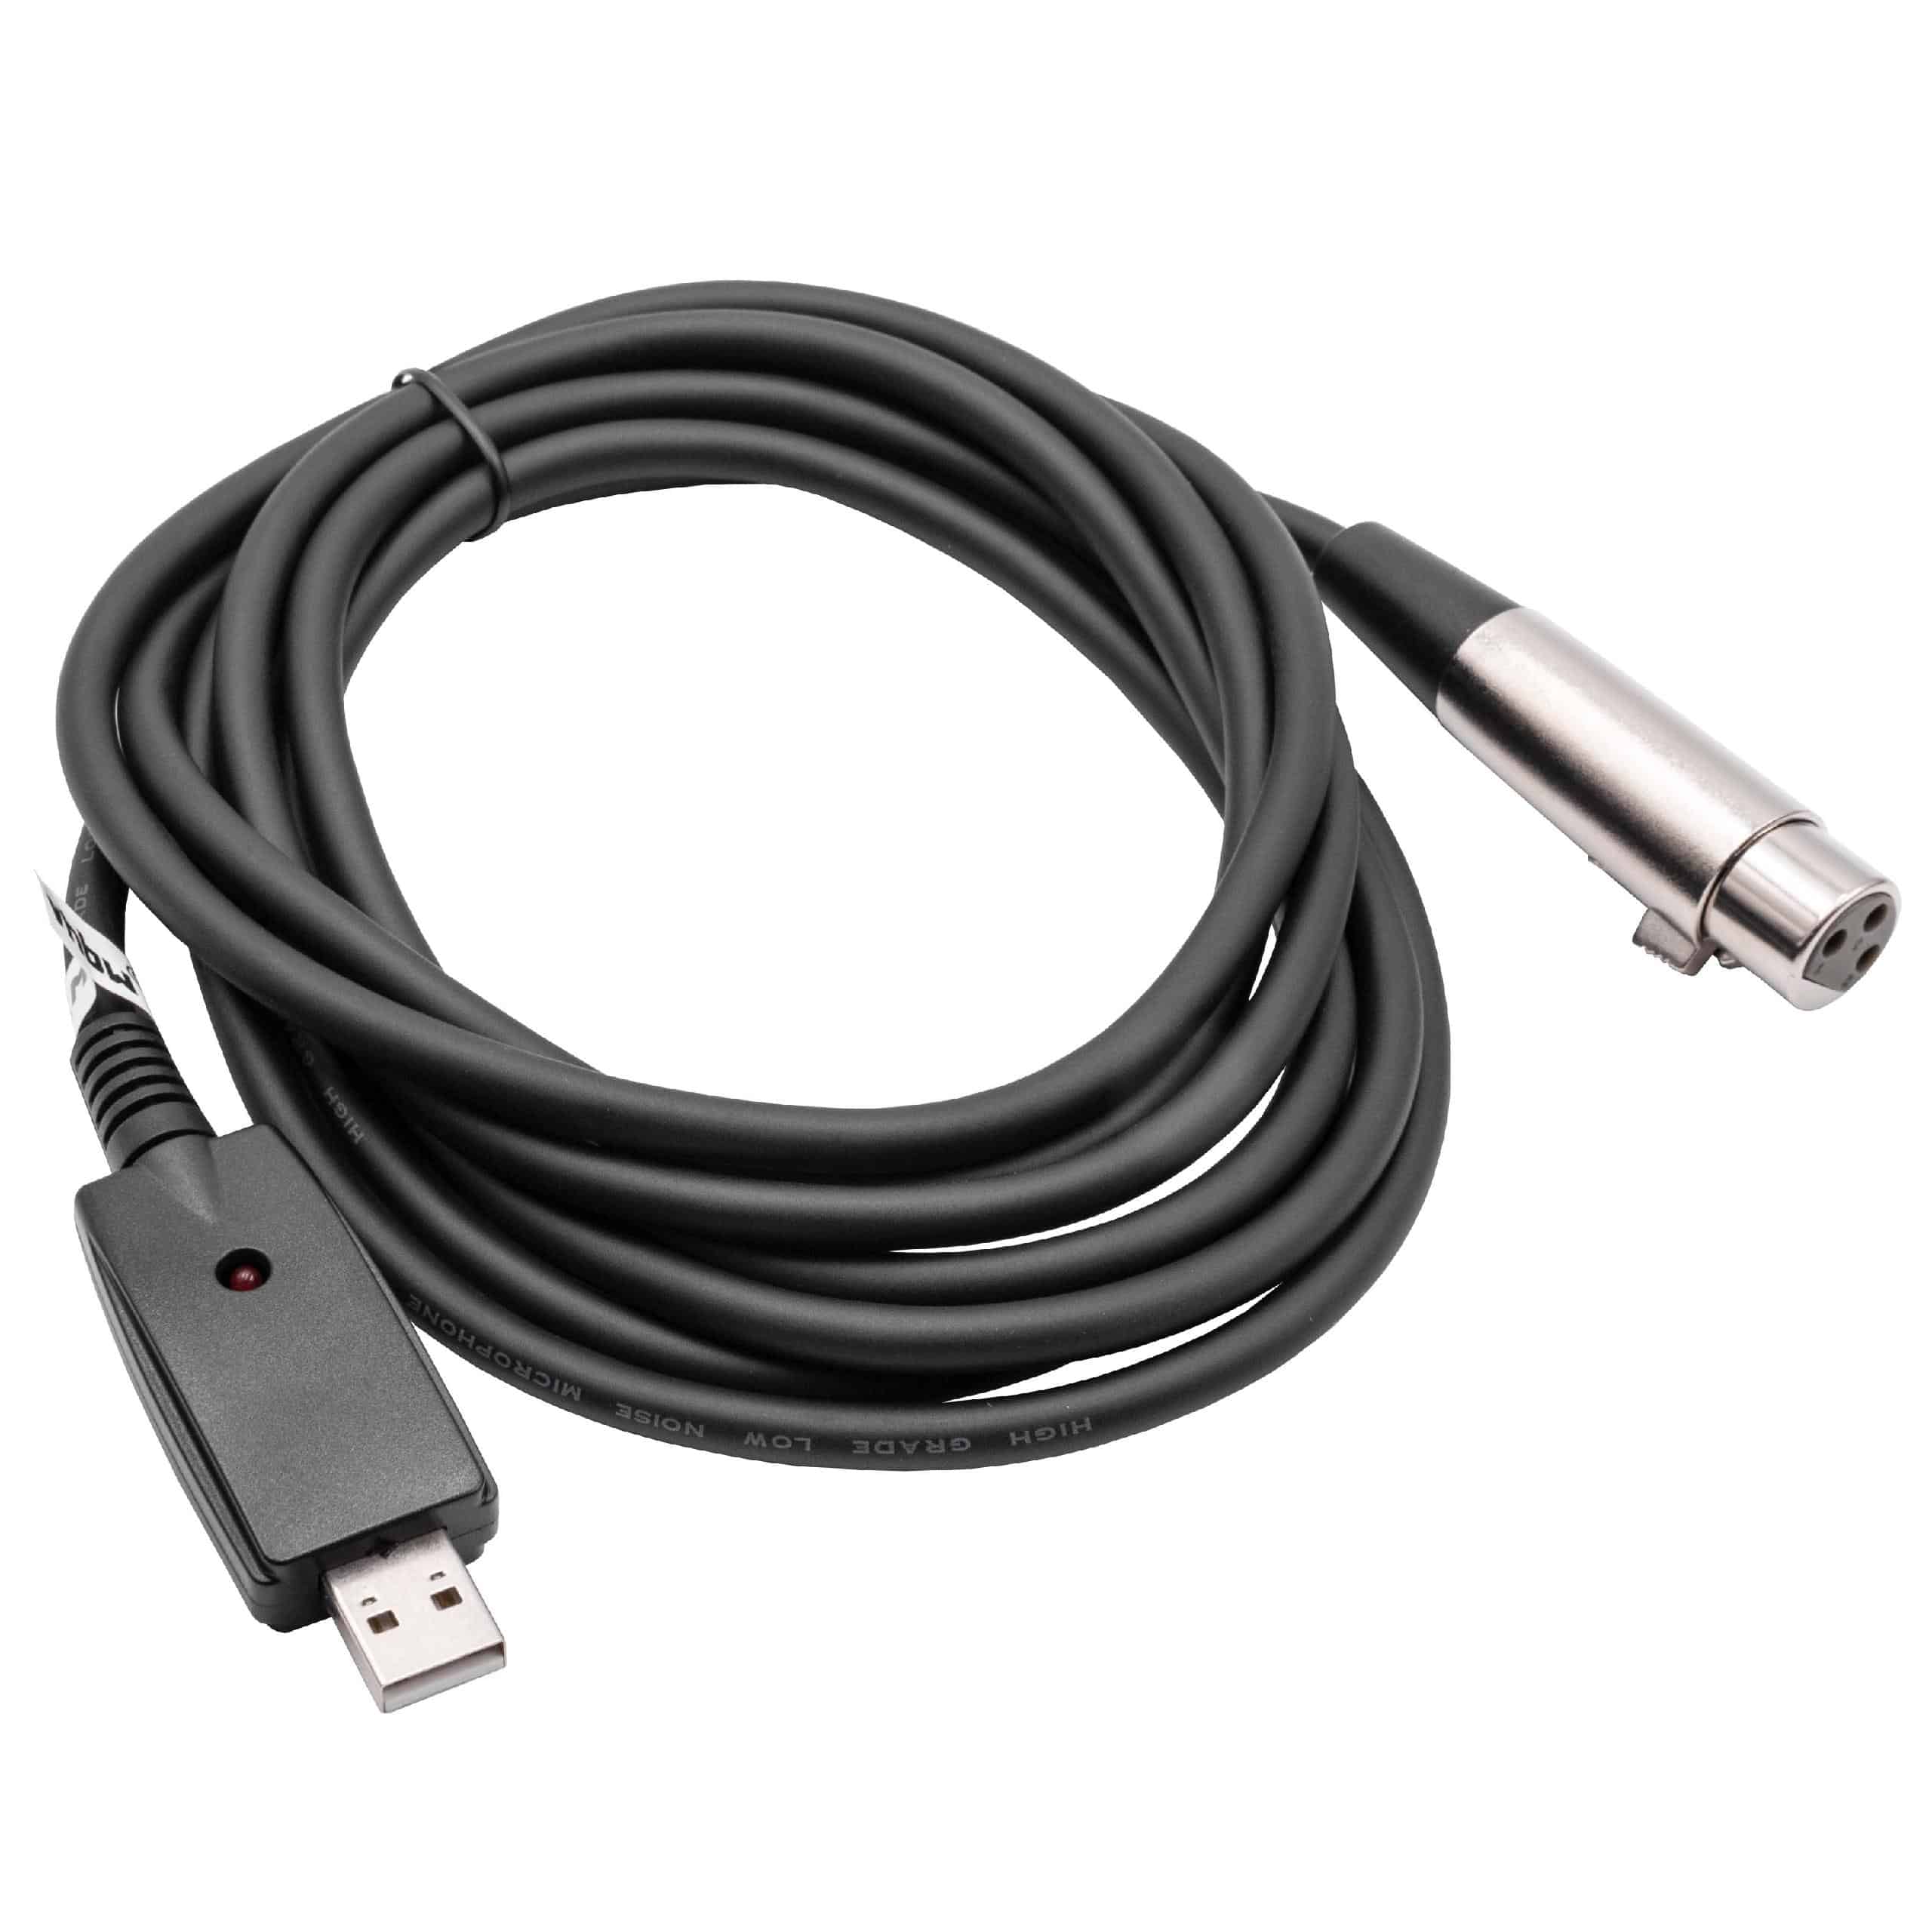 vhbw USB Cable Adapter USB 2.0 to XLR Socket 3-Pins - 2.8m Microphone Lead, Studio Audio Cord